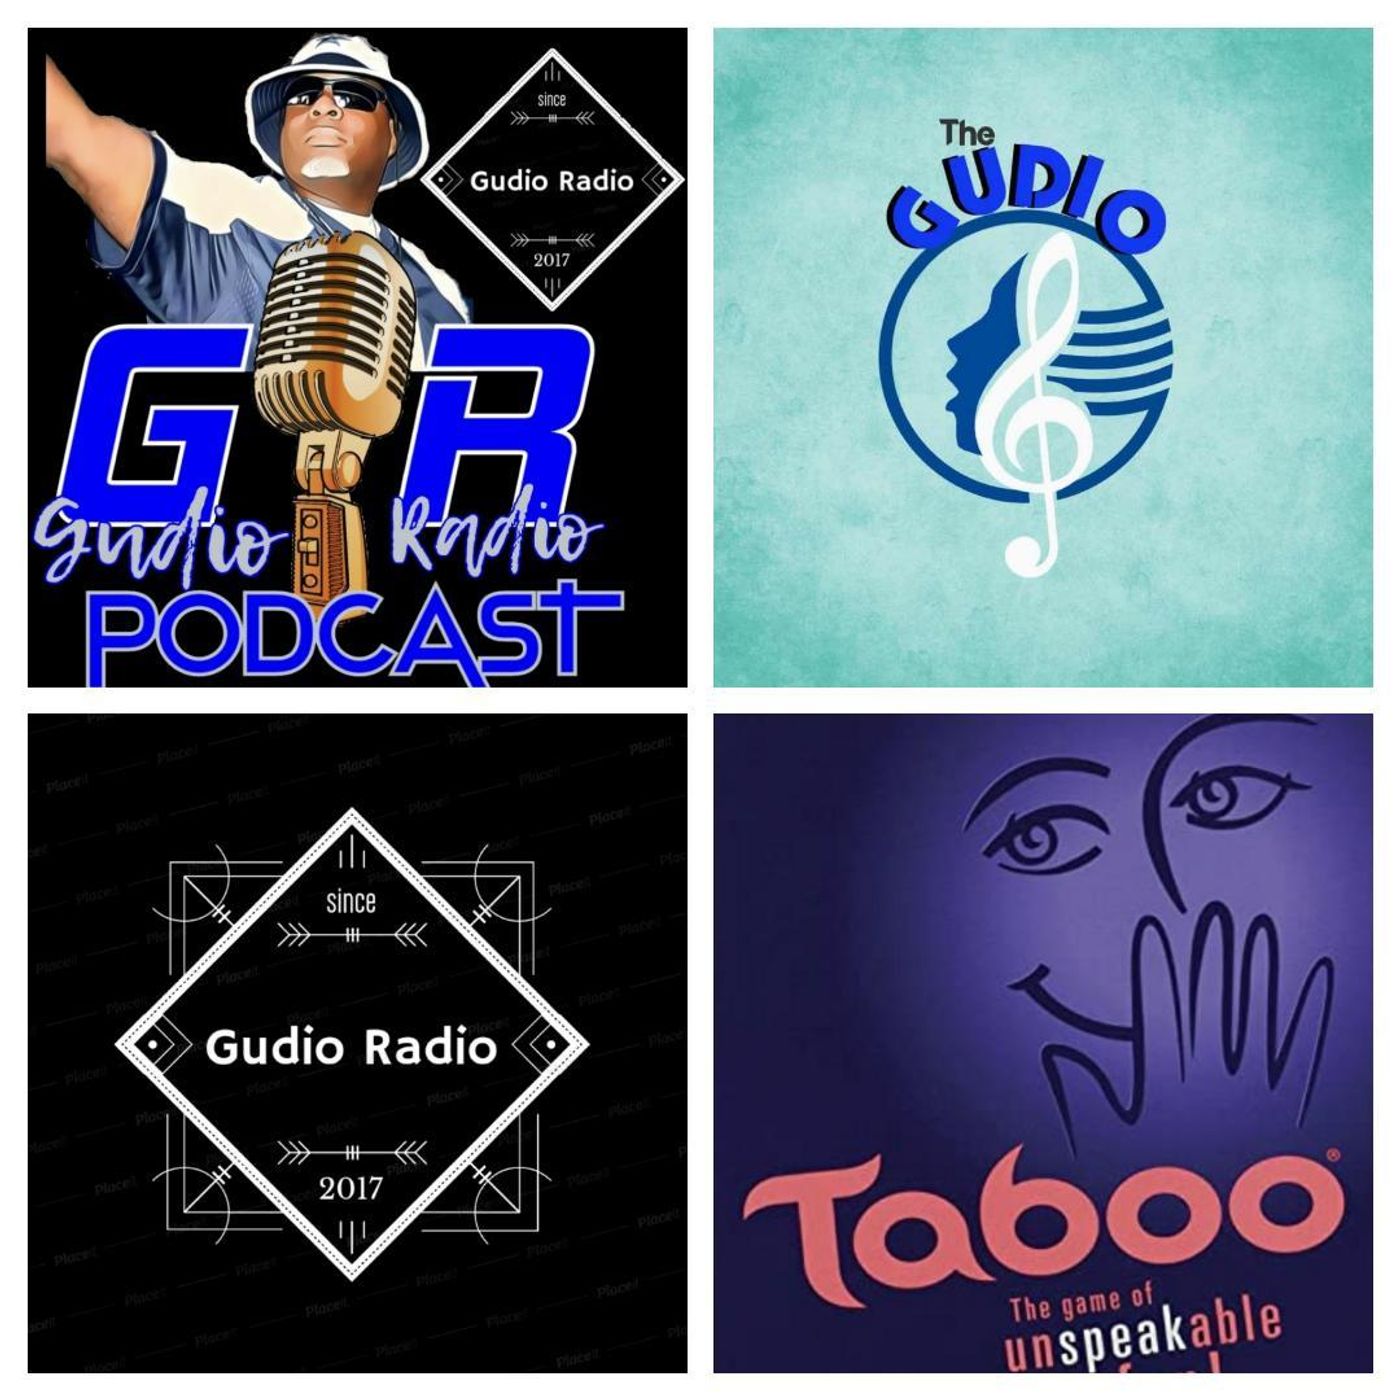 DGratest Gudio Radio Presents : "Love Jones, Conversation and Taboo